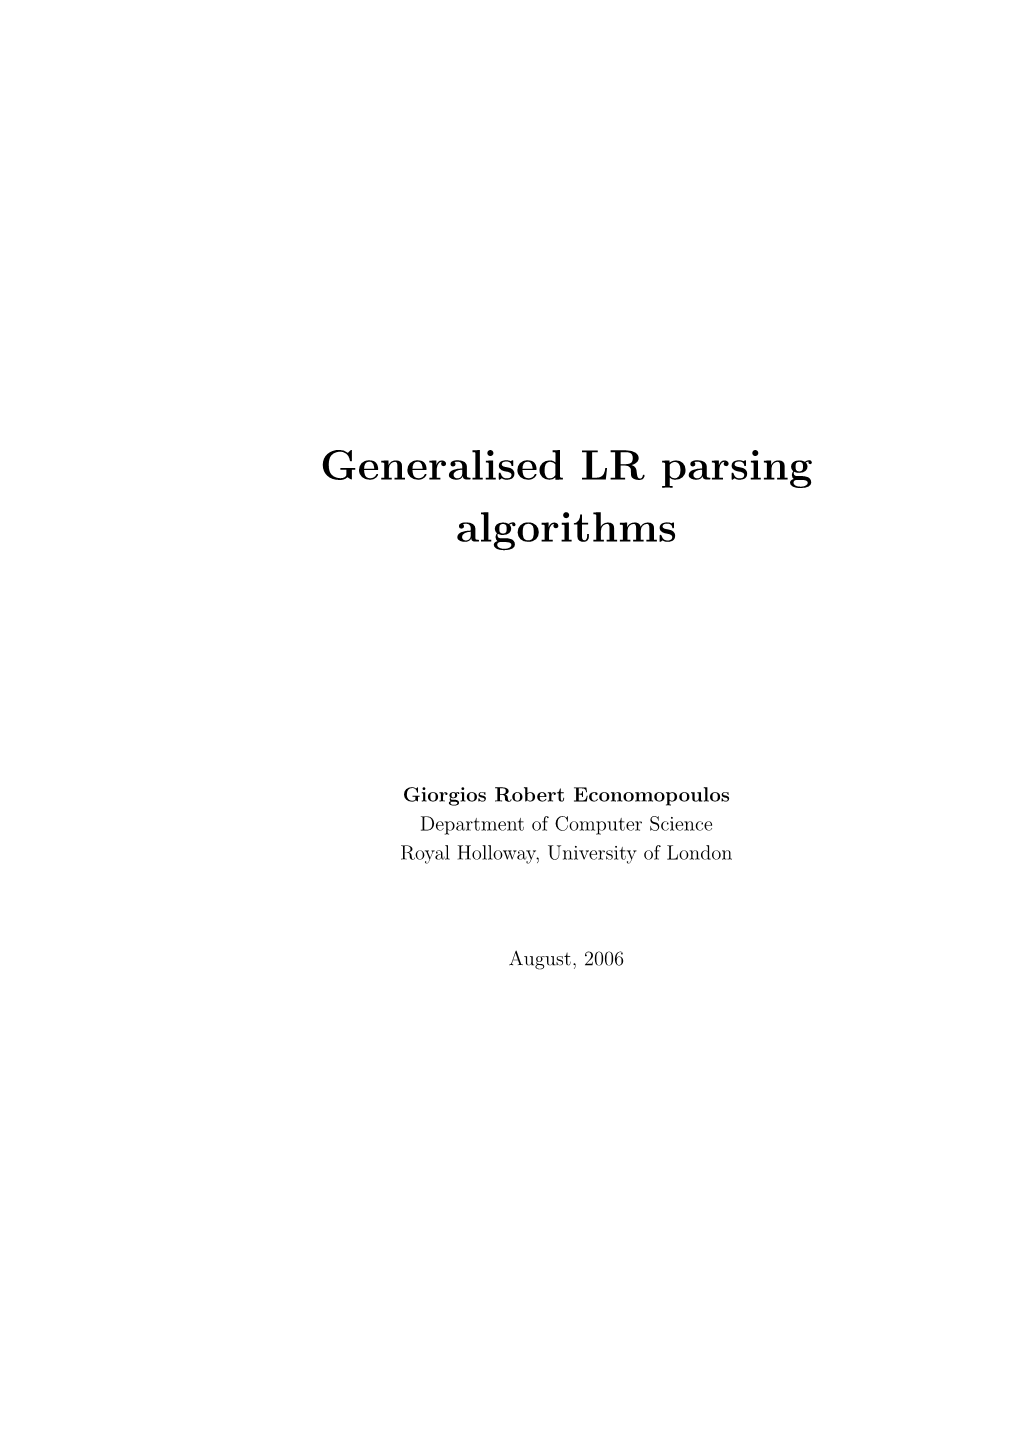 Generalised LR Parsing Algorithms